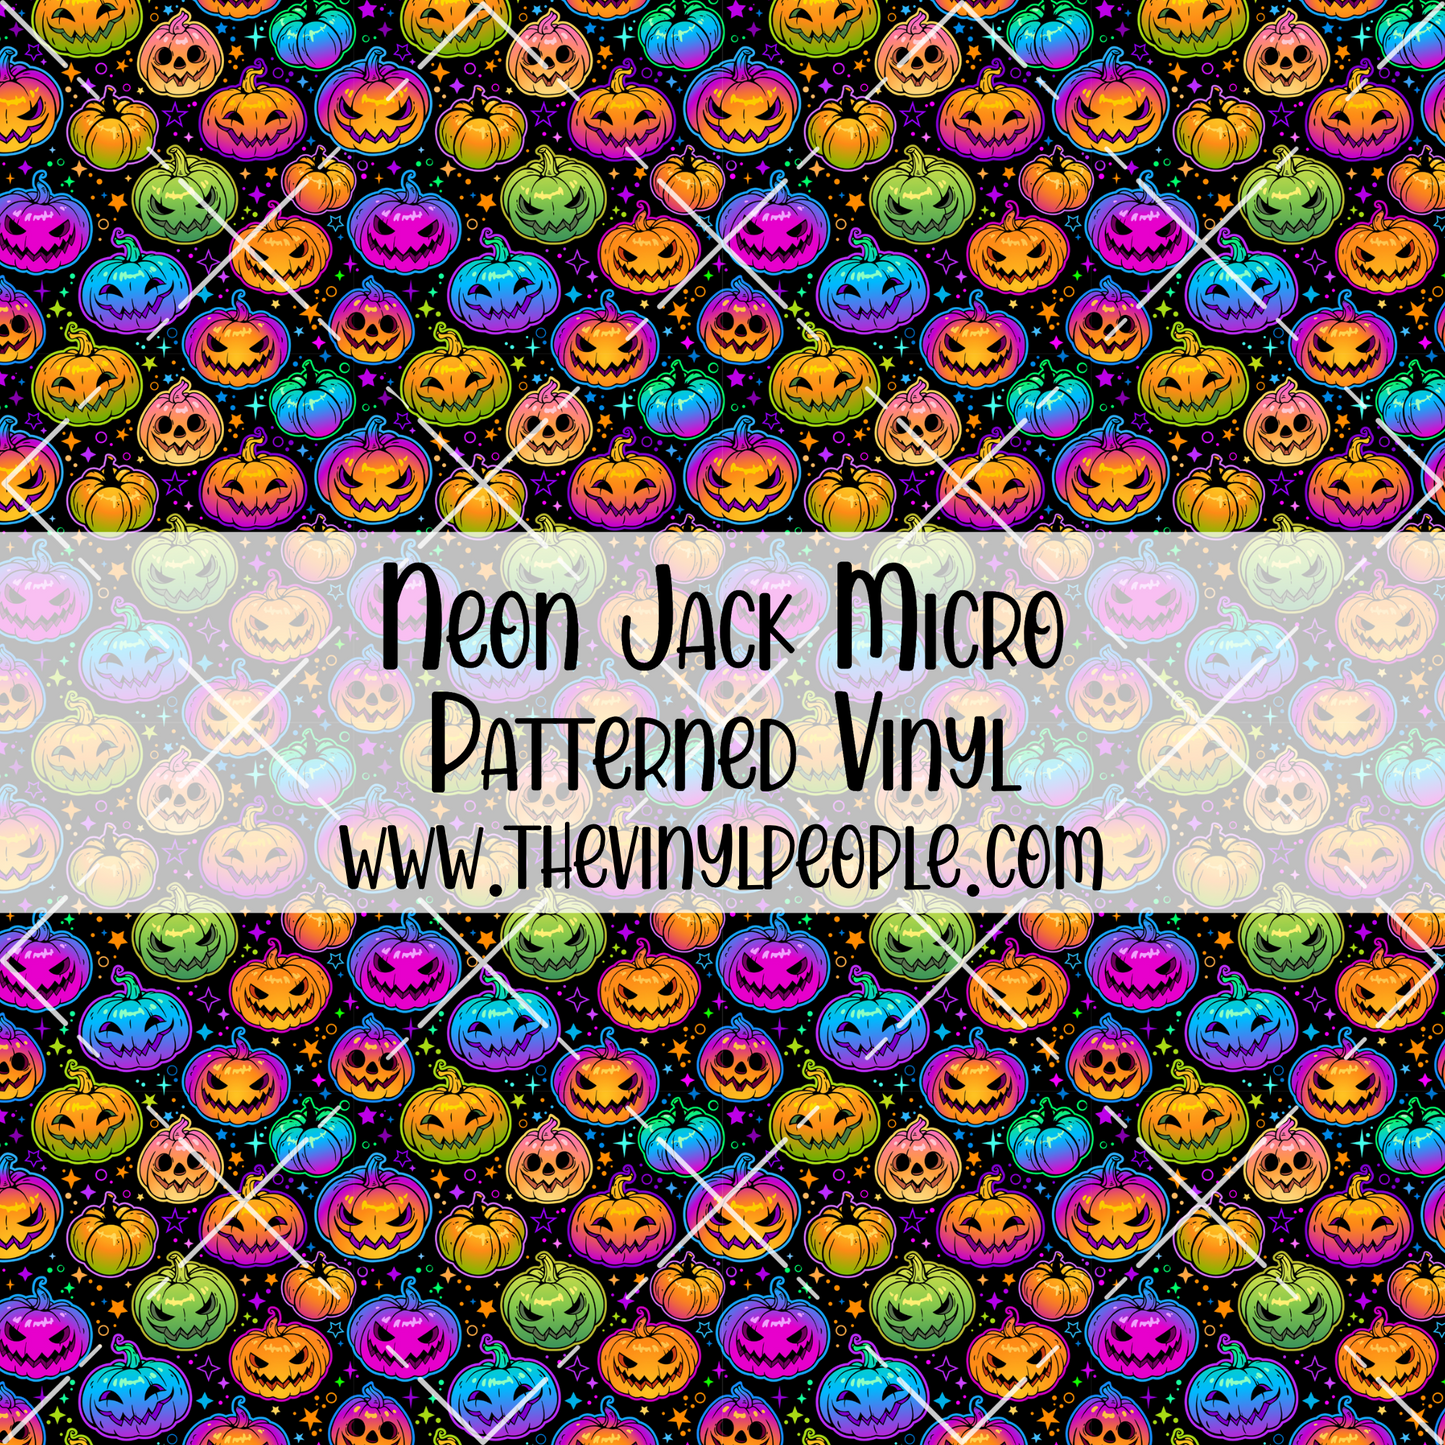 Neon Jack Patterned Vinyl